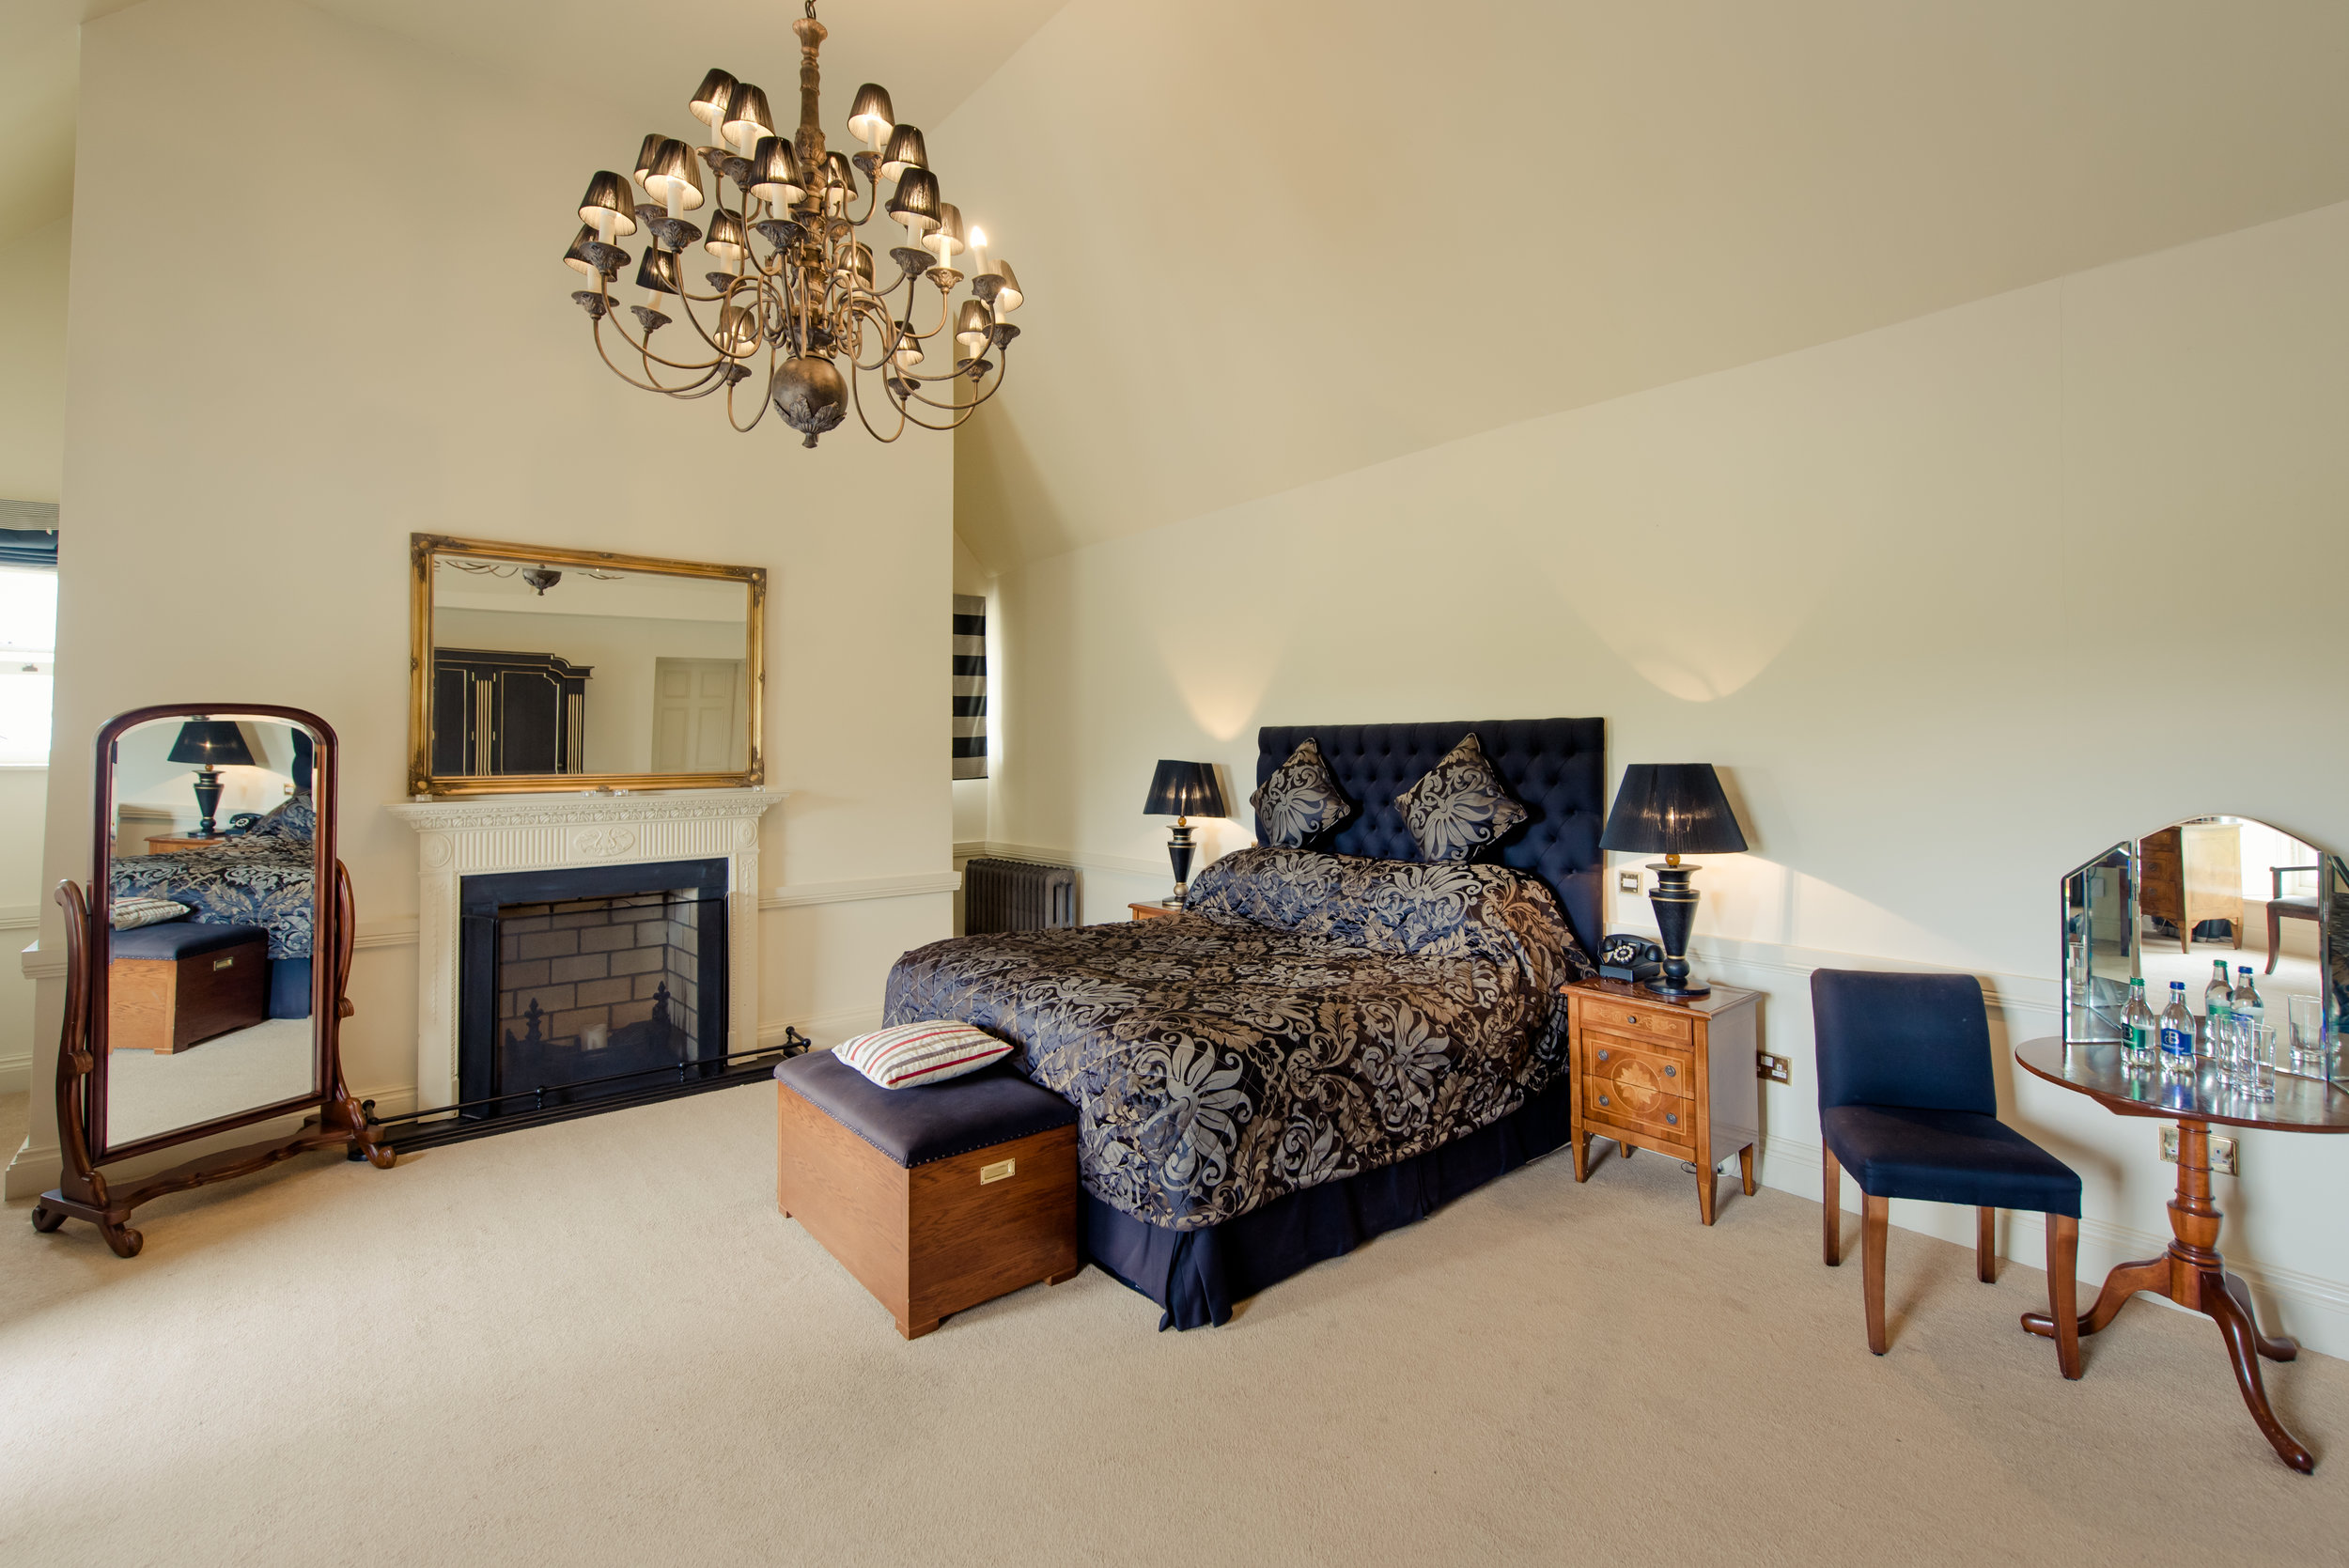 Tulfarris Hotel & Golf Resort Manor House luxurious bedroom with chandelier.jpg